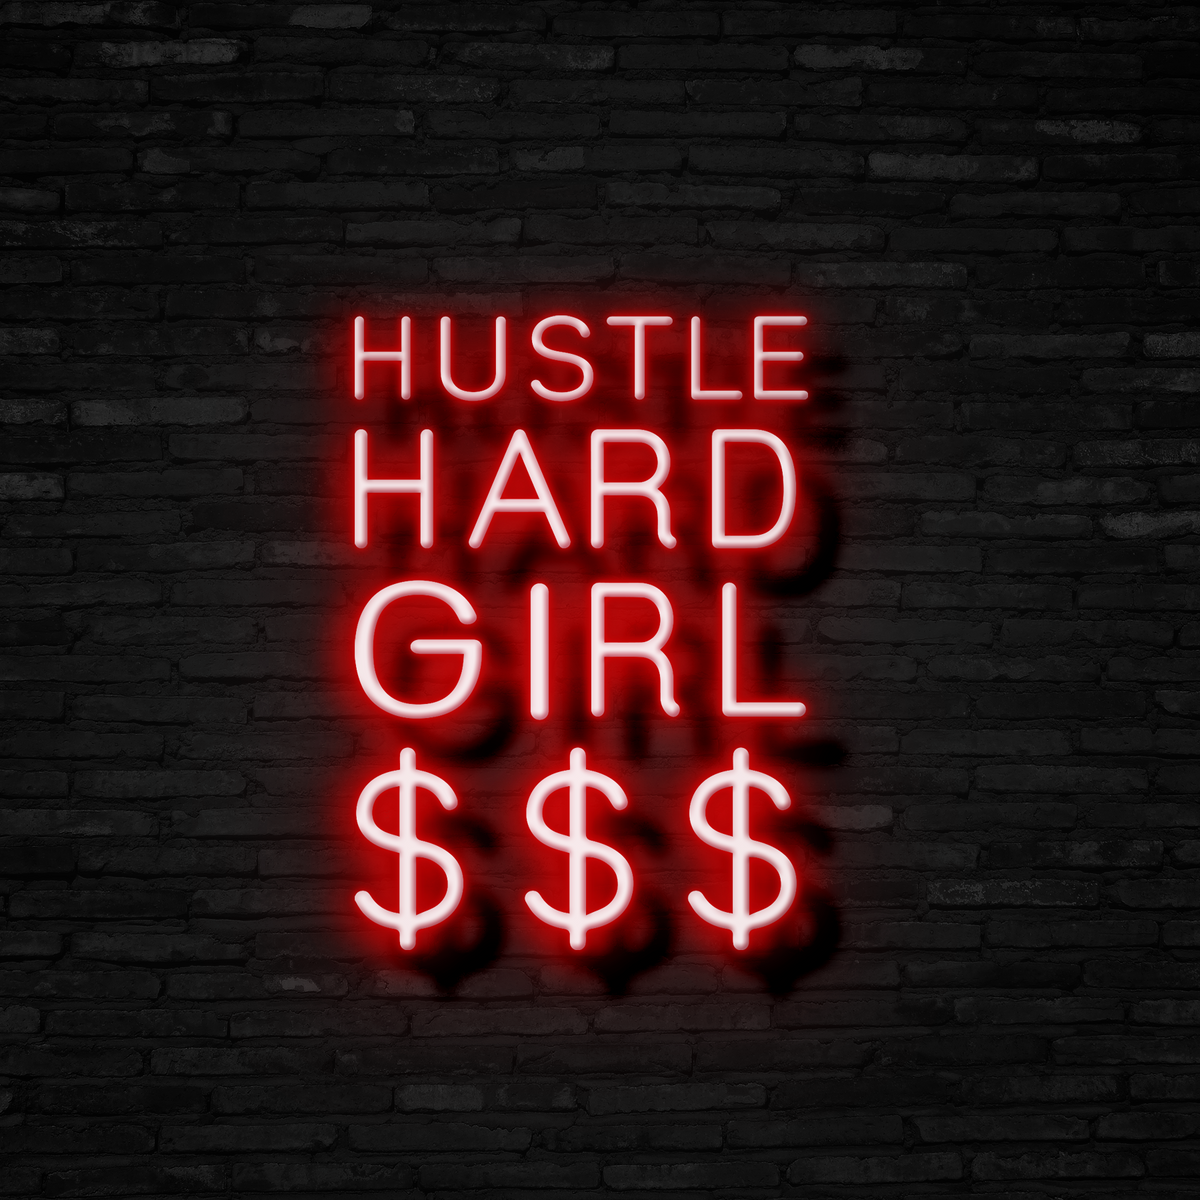 Hustle Hard Girl $$$ - Neon Sign